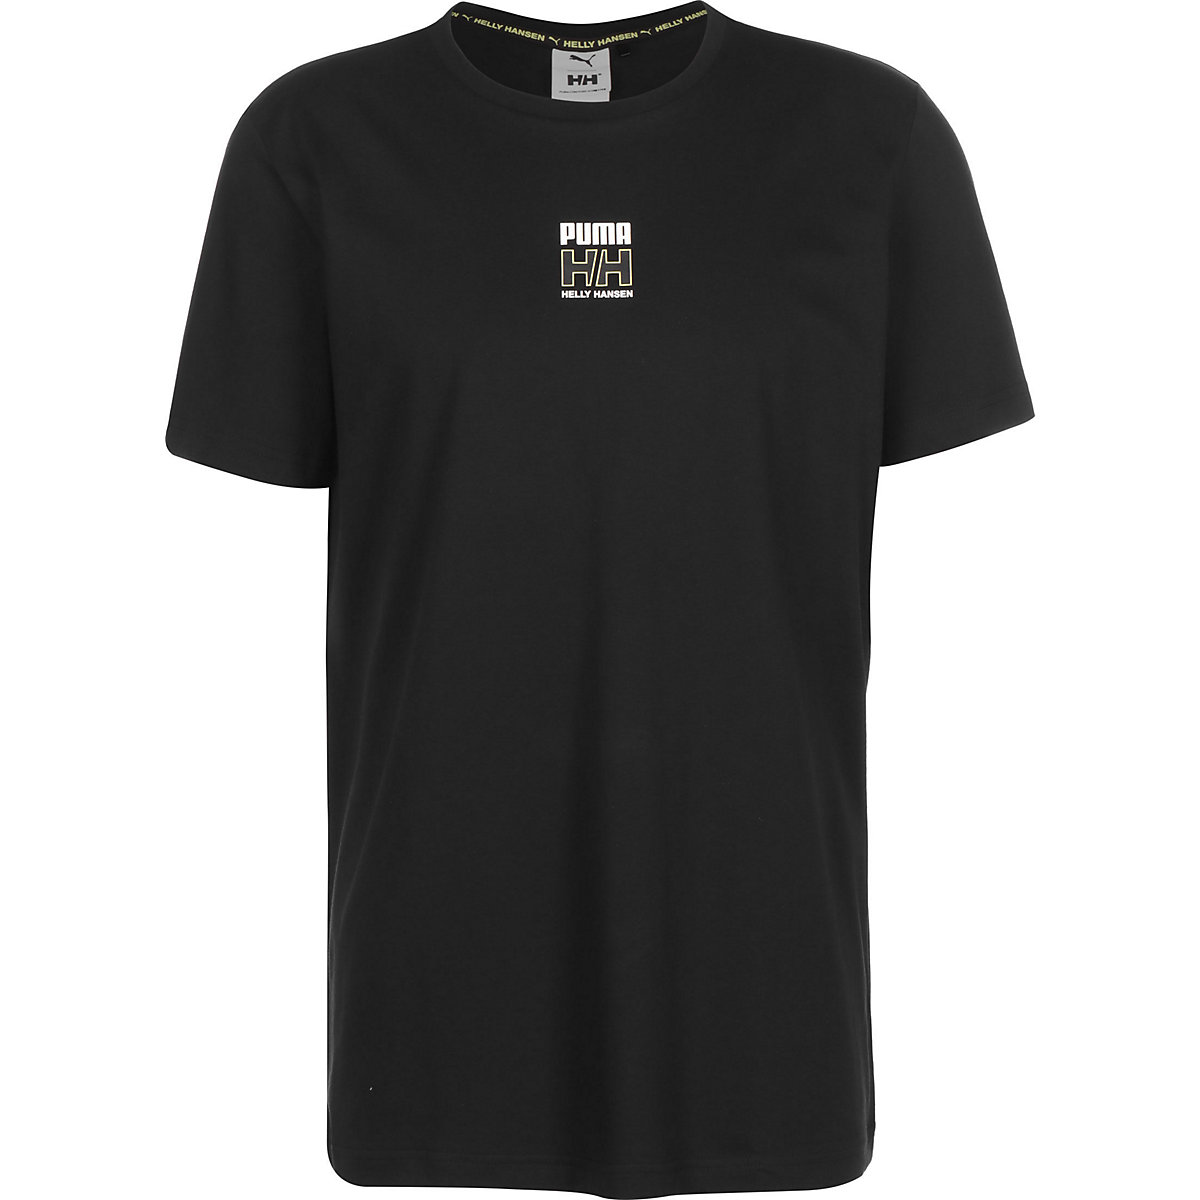 PUMA Puma T-Shirt x Helly Hansen T-Shirts schwarz